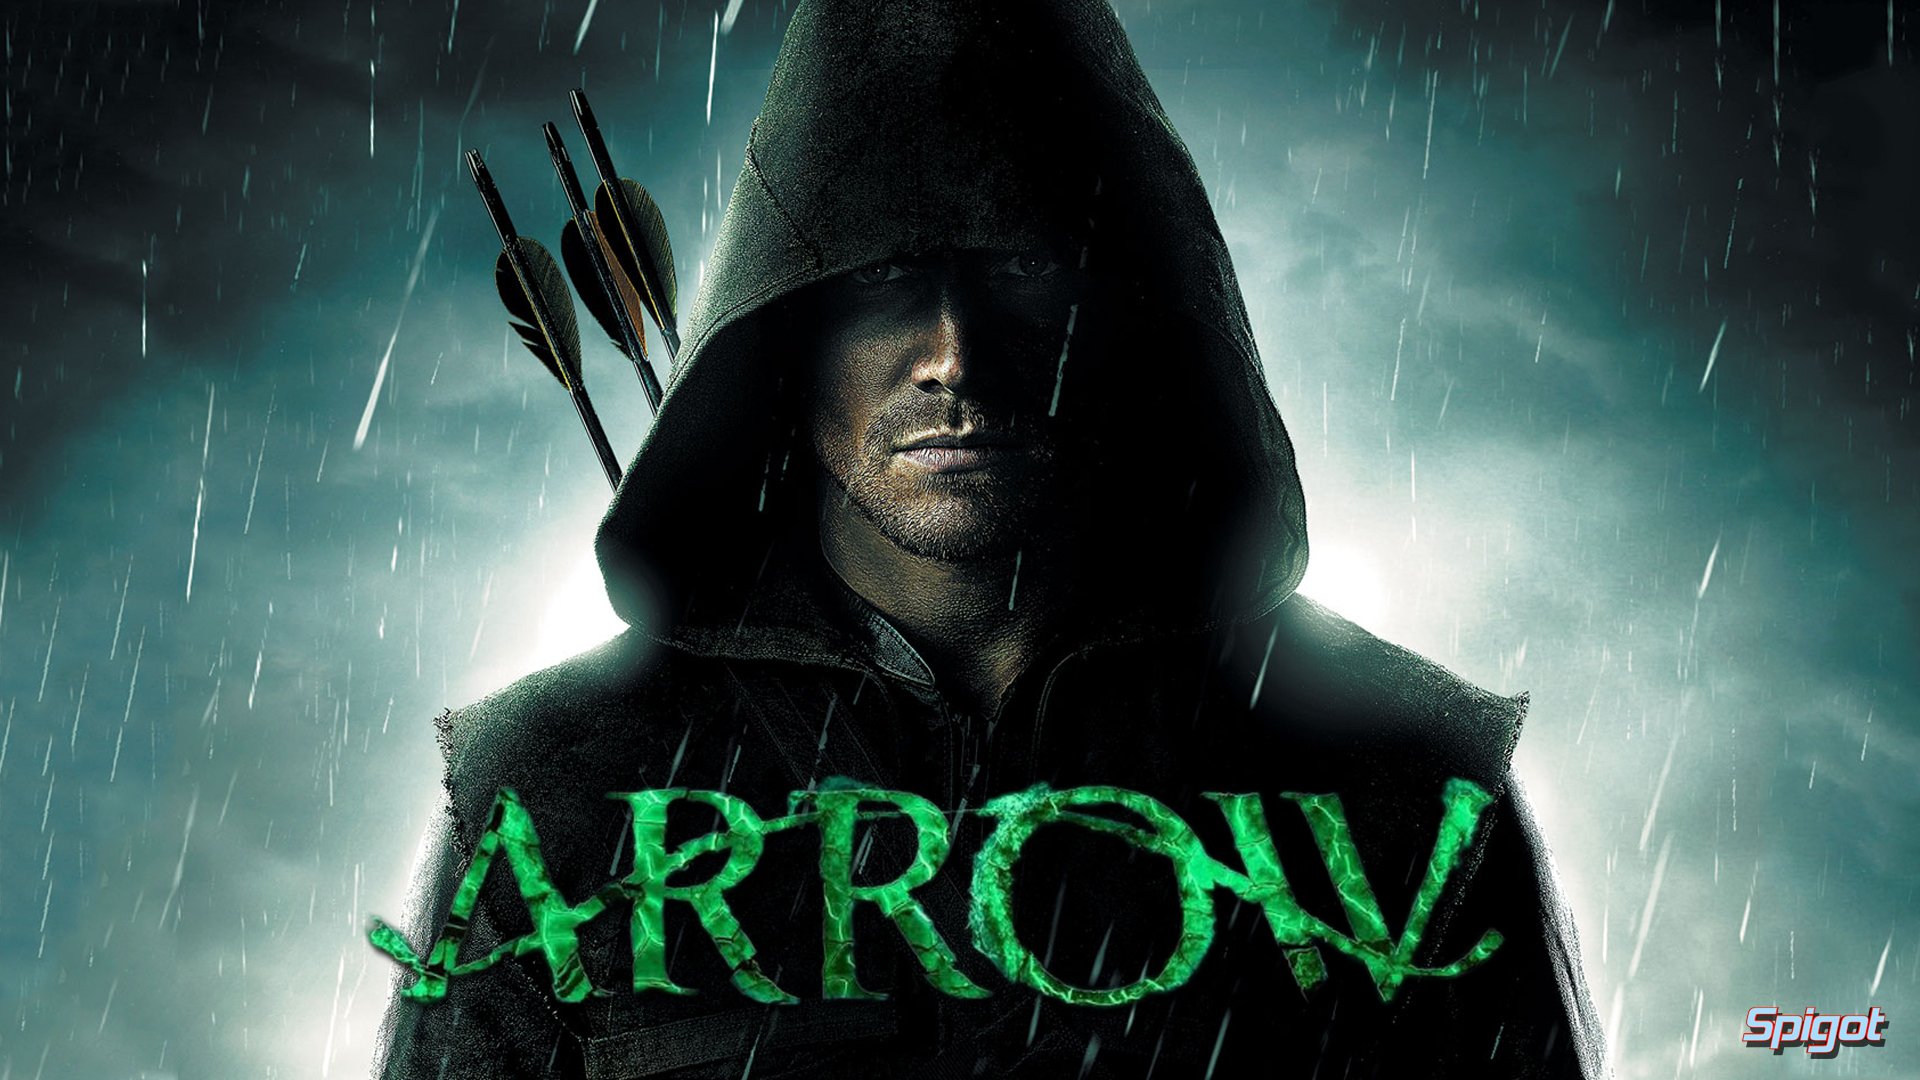 arrow, Green, Action, Adventure, Crime, Television, Series, Poster, Warrior, Archer Wallpaper